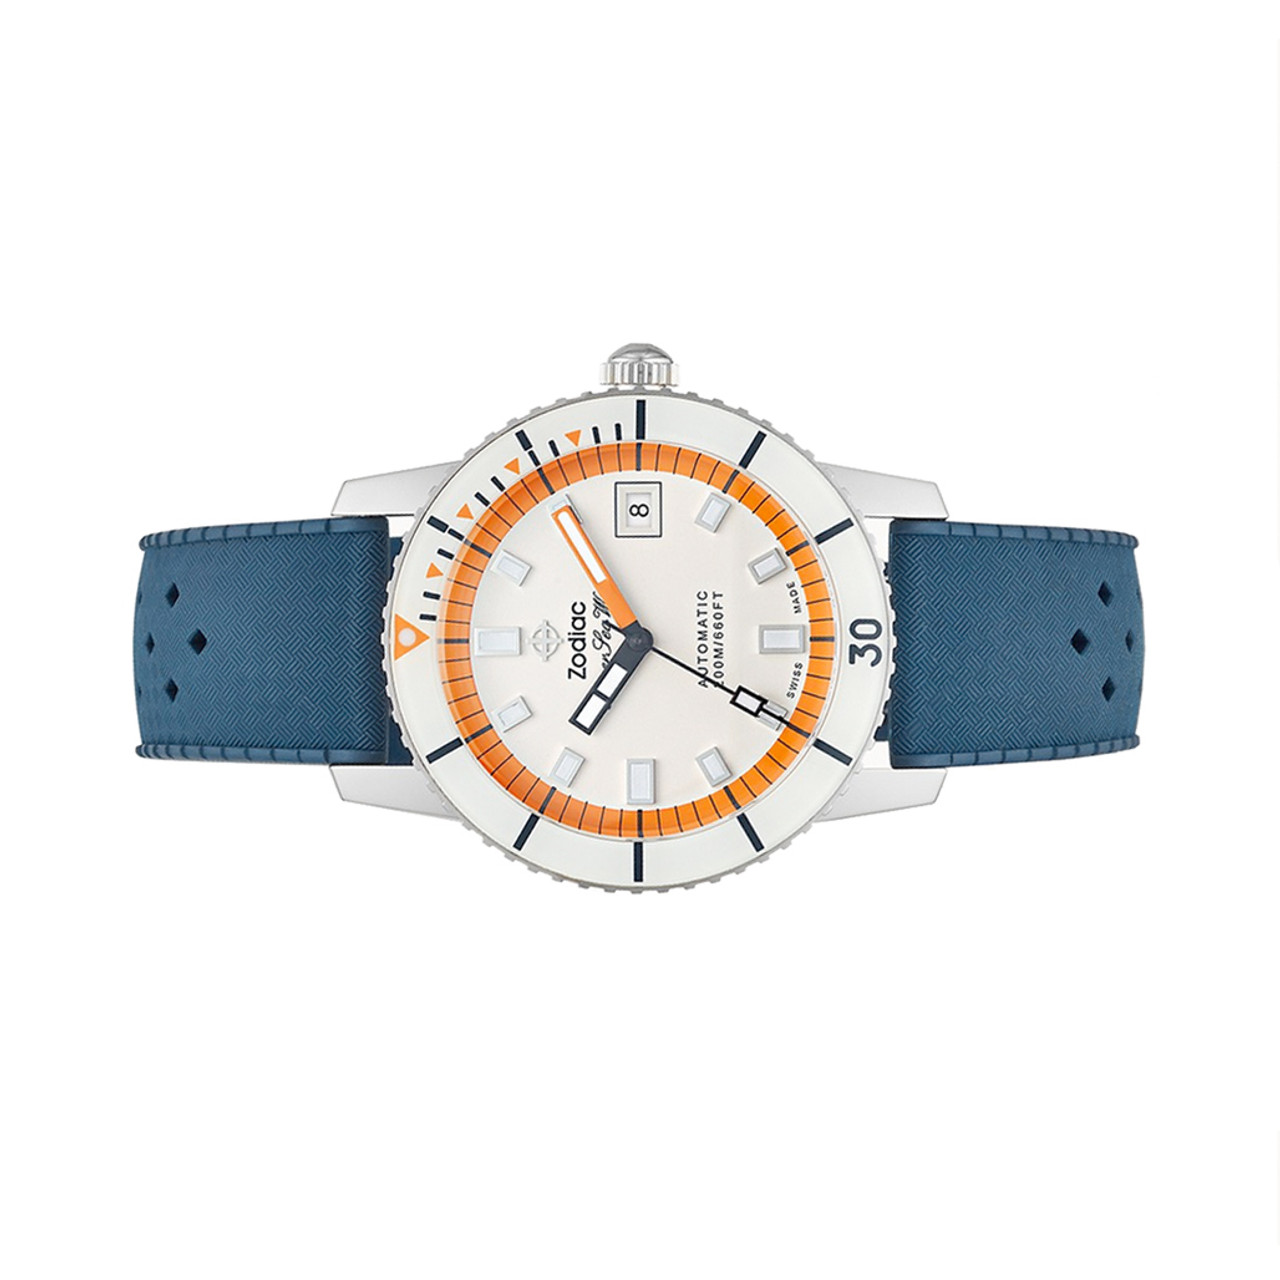 Zodiac Super Sea Wolf Automatic Blue Rubber Watch #ZO9270